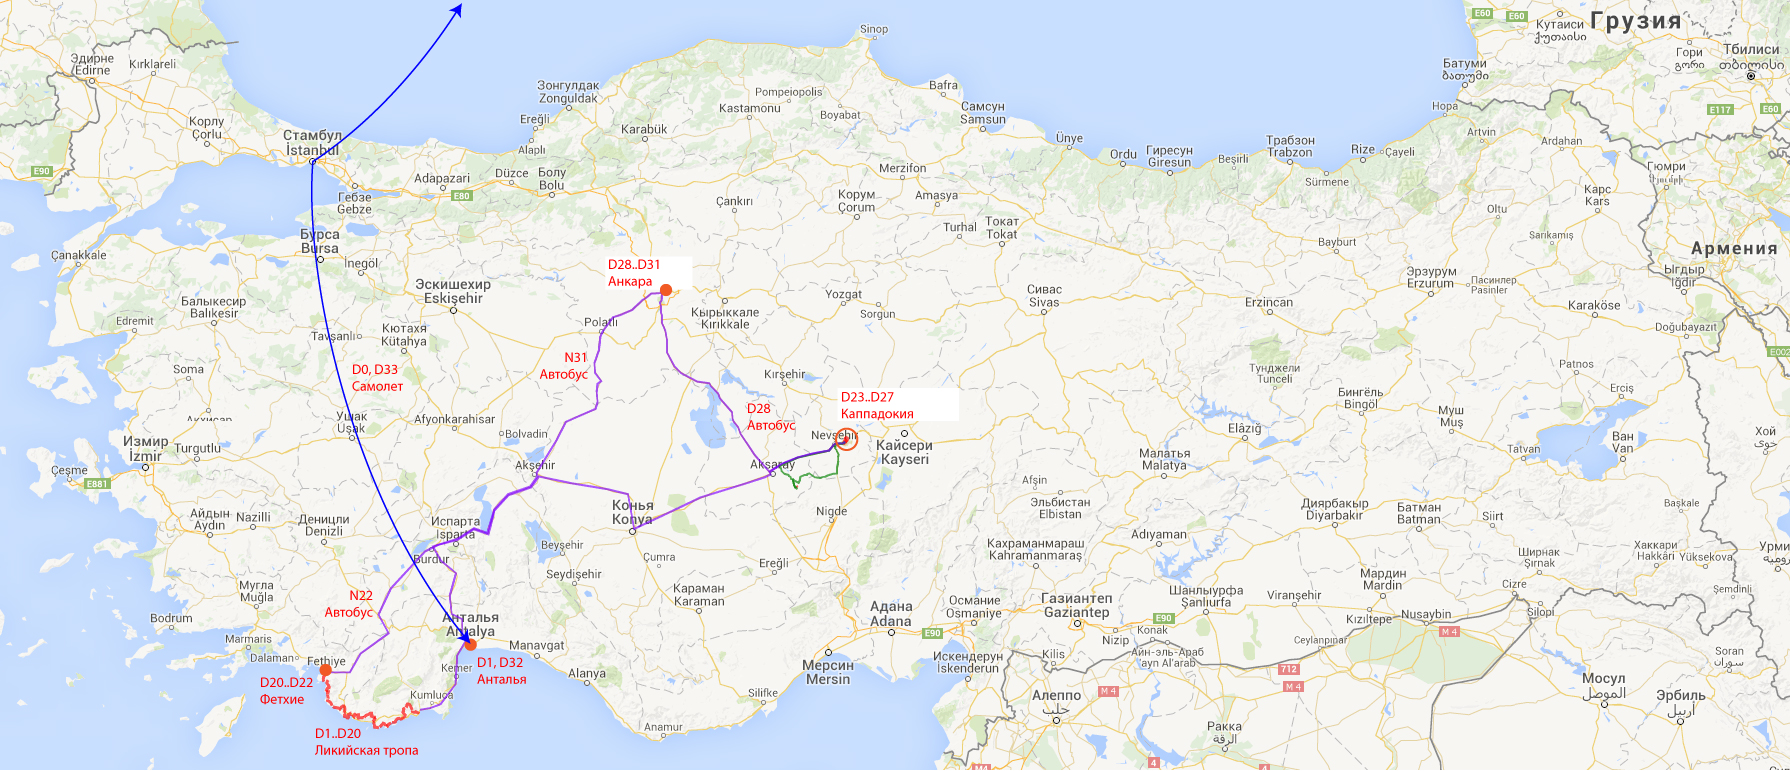 2016_03_22_0000 All Turkey - Google Map.jpg